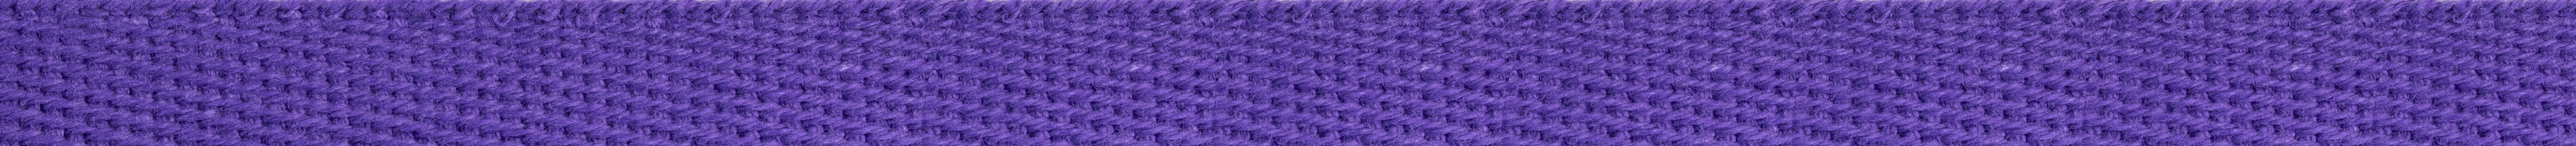 Purple Herringone Tape